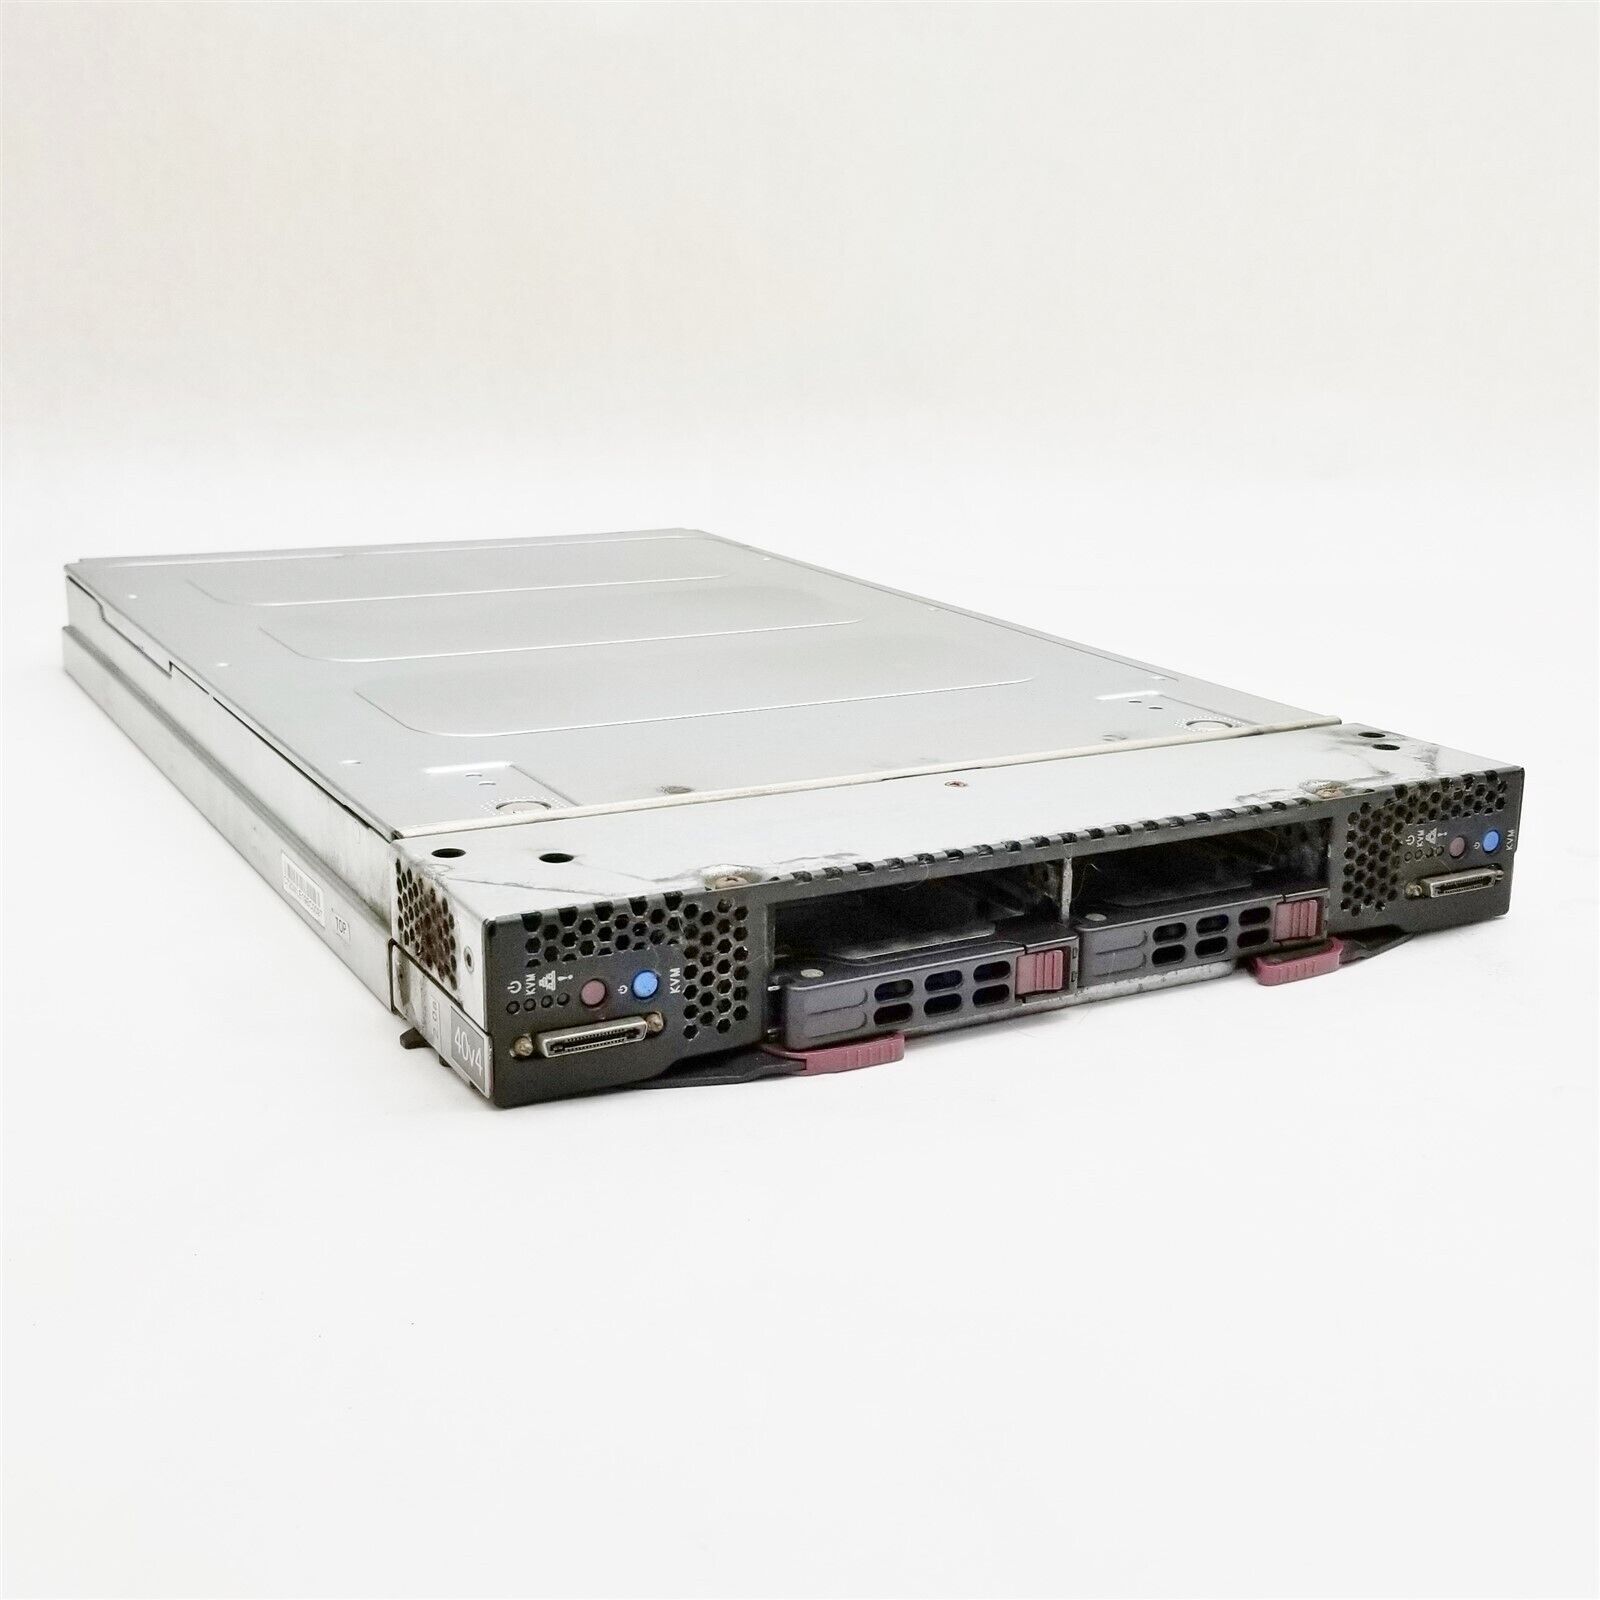 Supermicro SBI-7228R-T2X Server Blade B10DRT-TP 4*E5-2640v4 2.4GHz No RAM/HDD